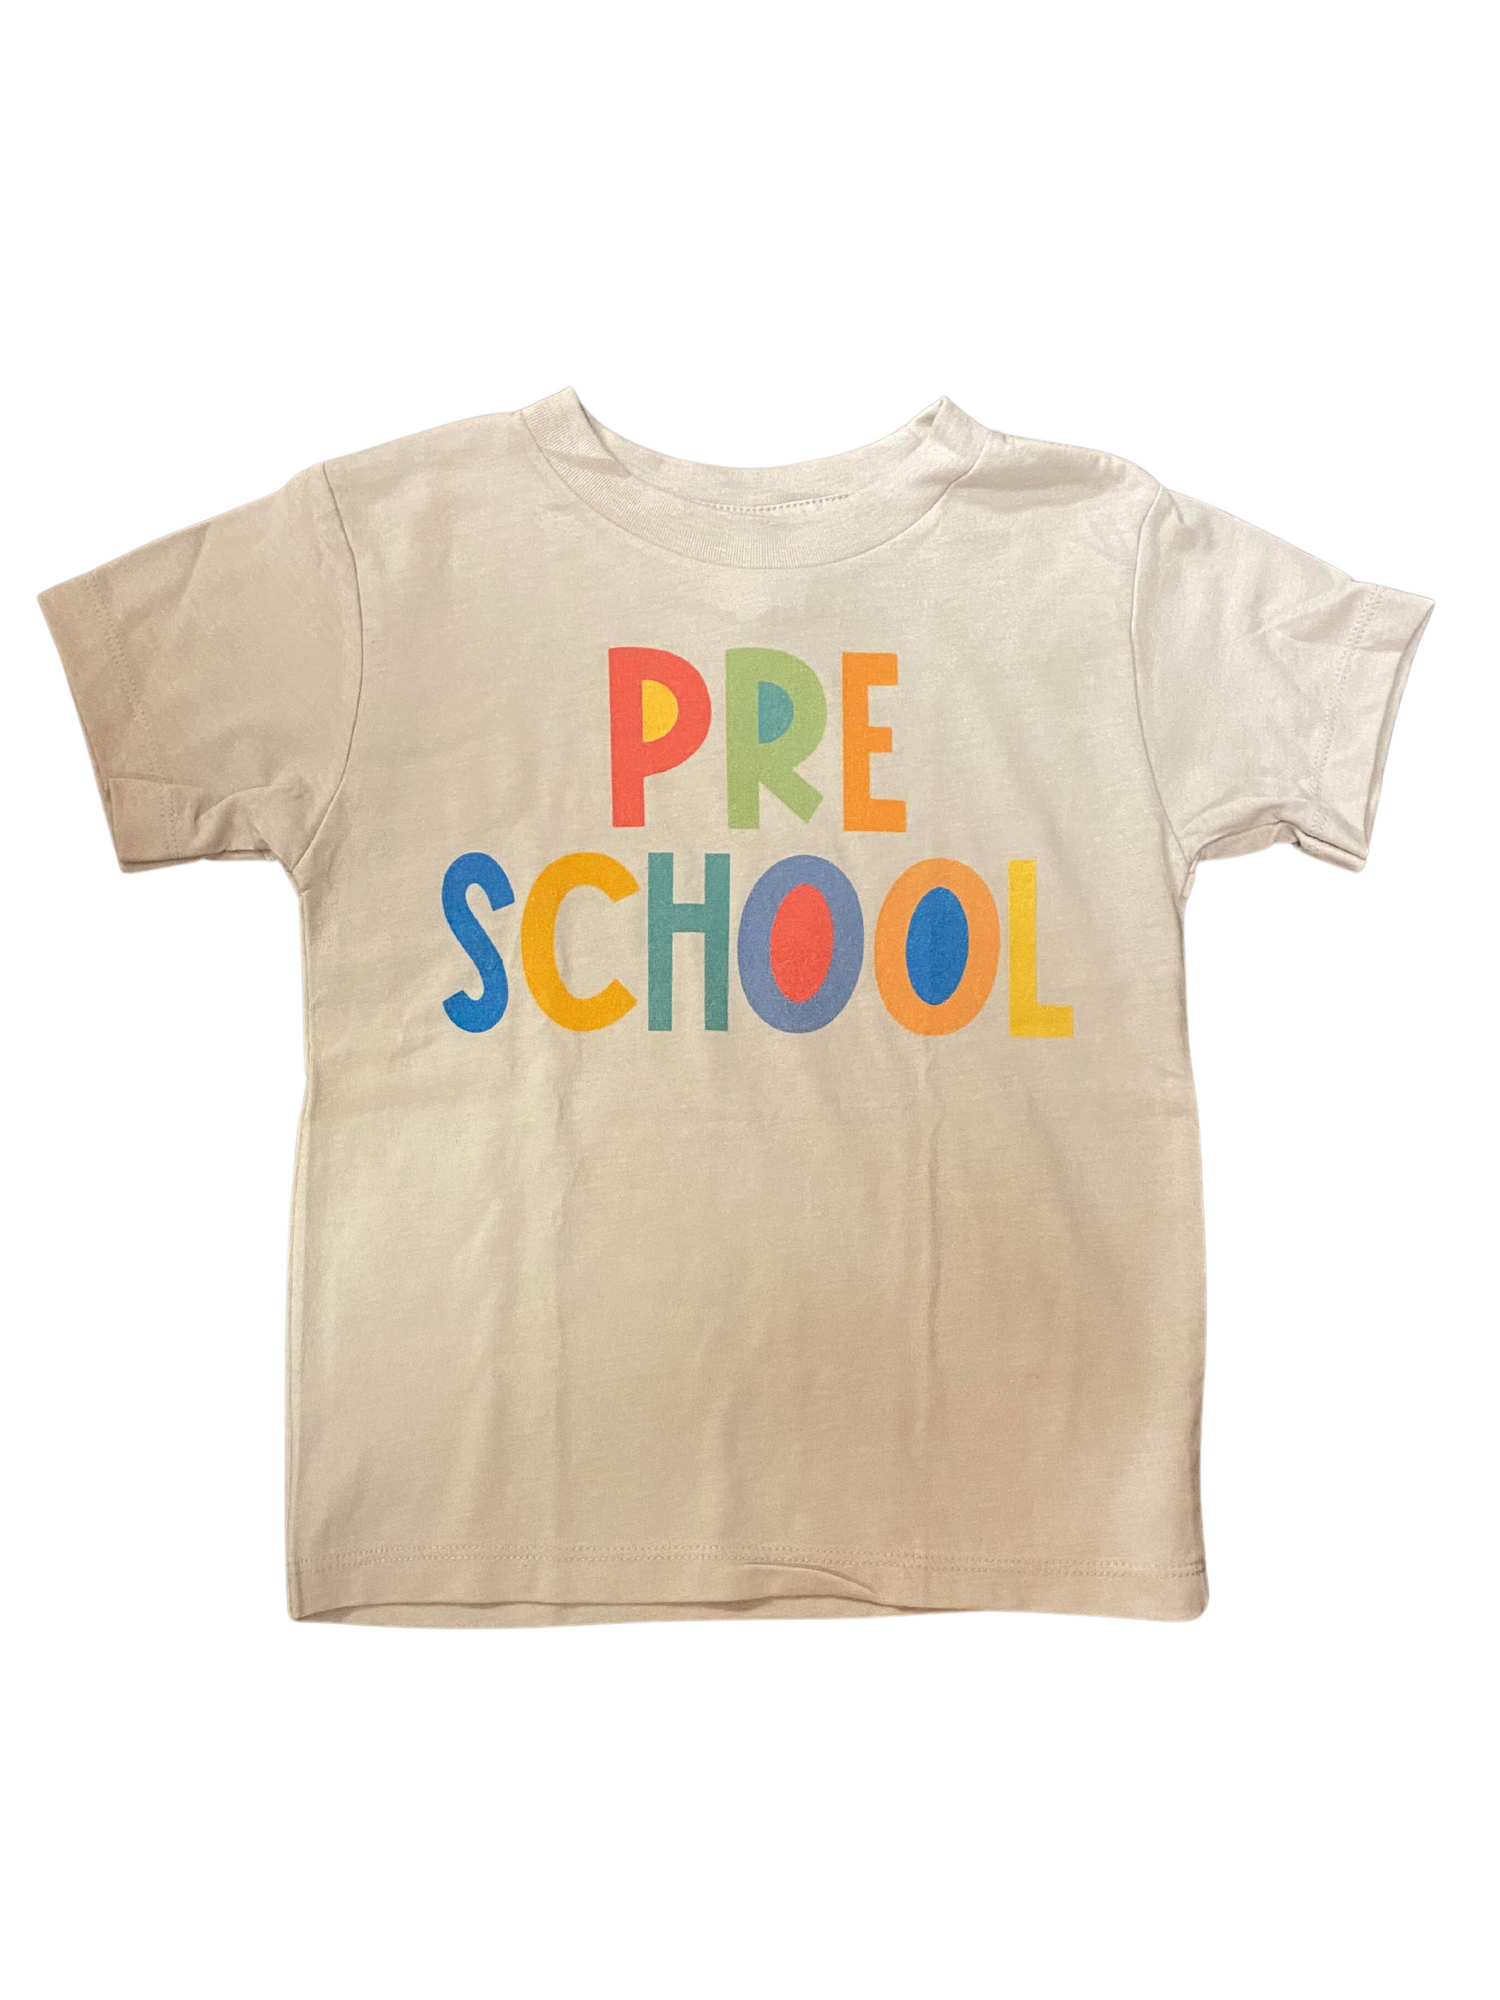 PRE SCHOOL TEE - THE LITTLE EAGLE BOUTIQUE